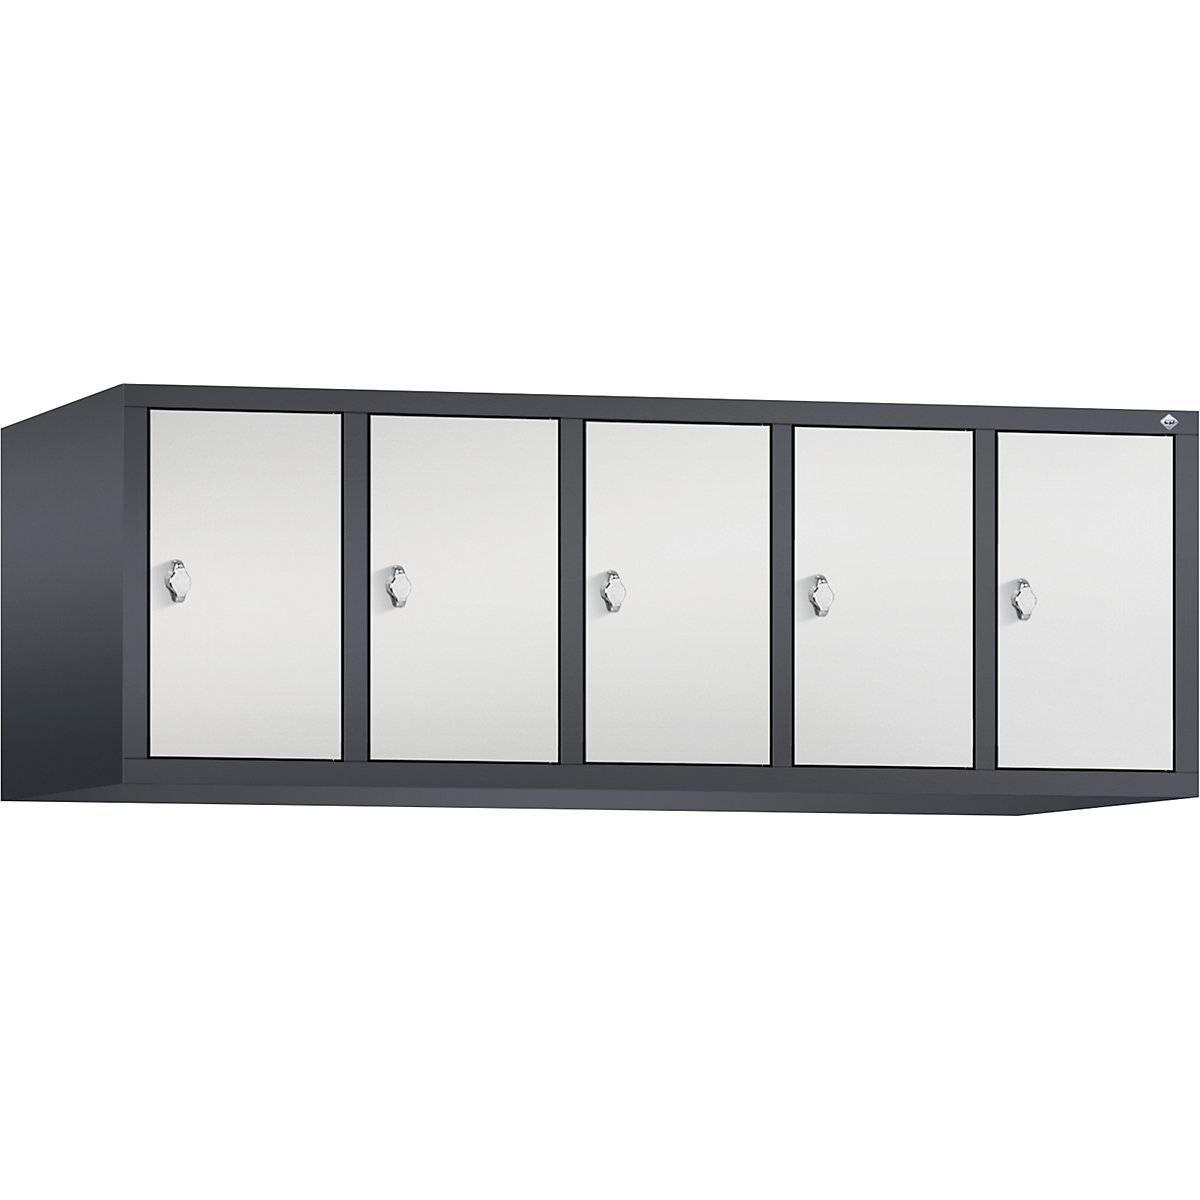 C+P – Altillo CLASSIC, 5 compartimentos, anchura de compartimento 300 mm, gris negruzco / gris luminoso